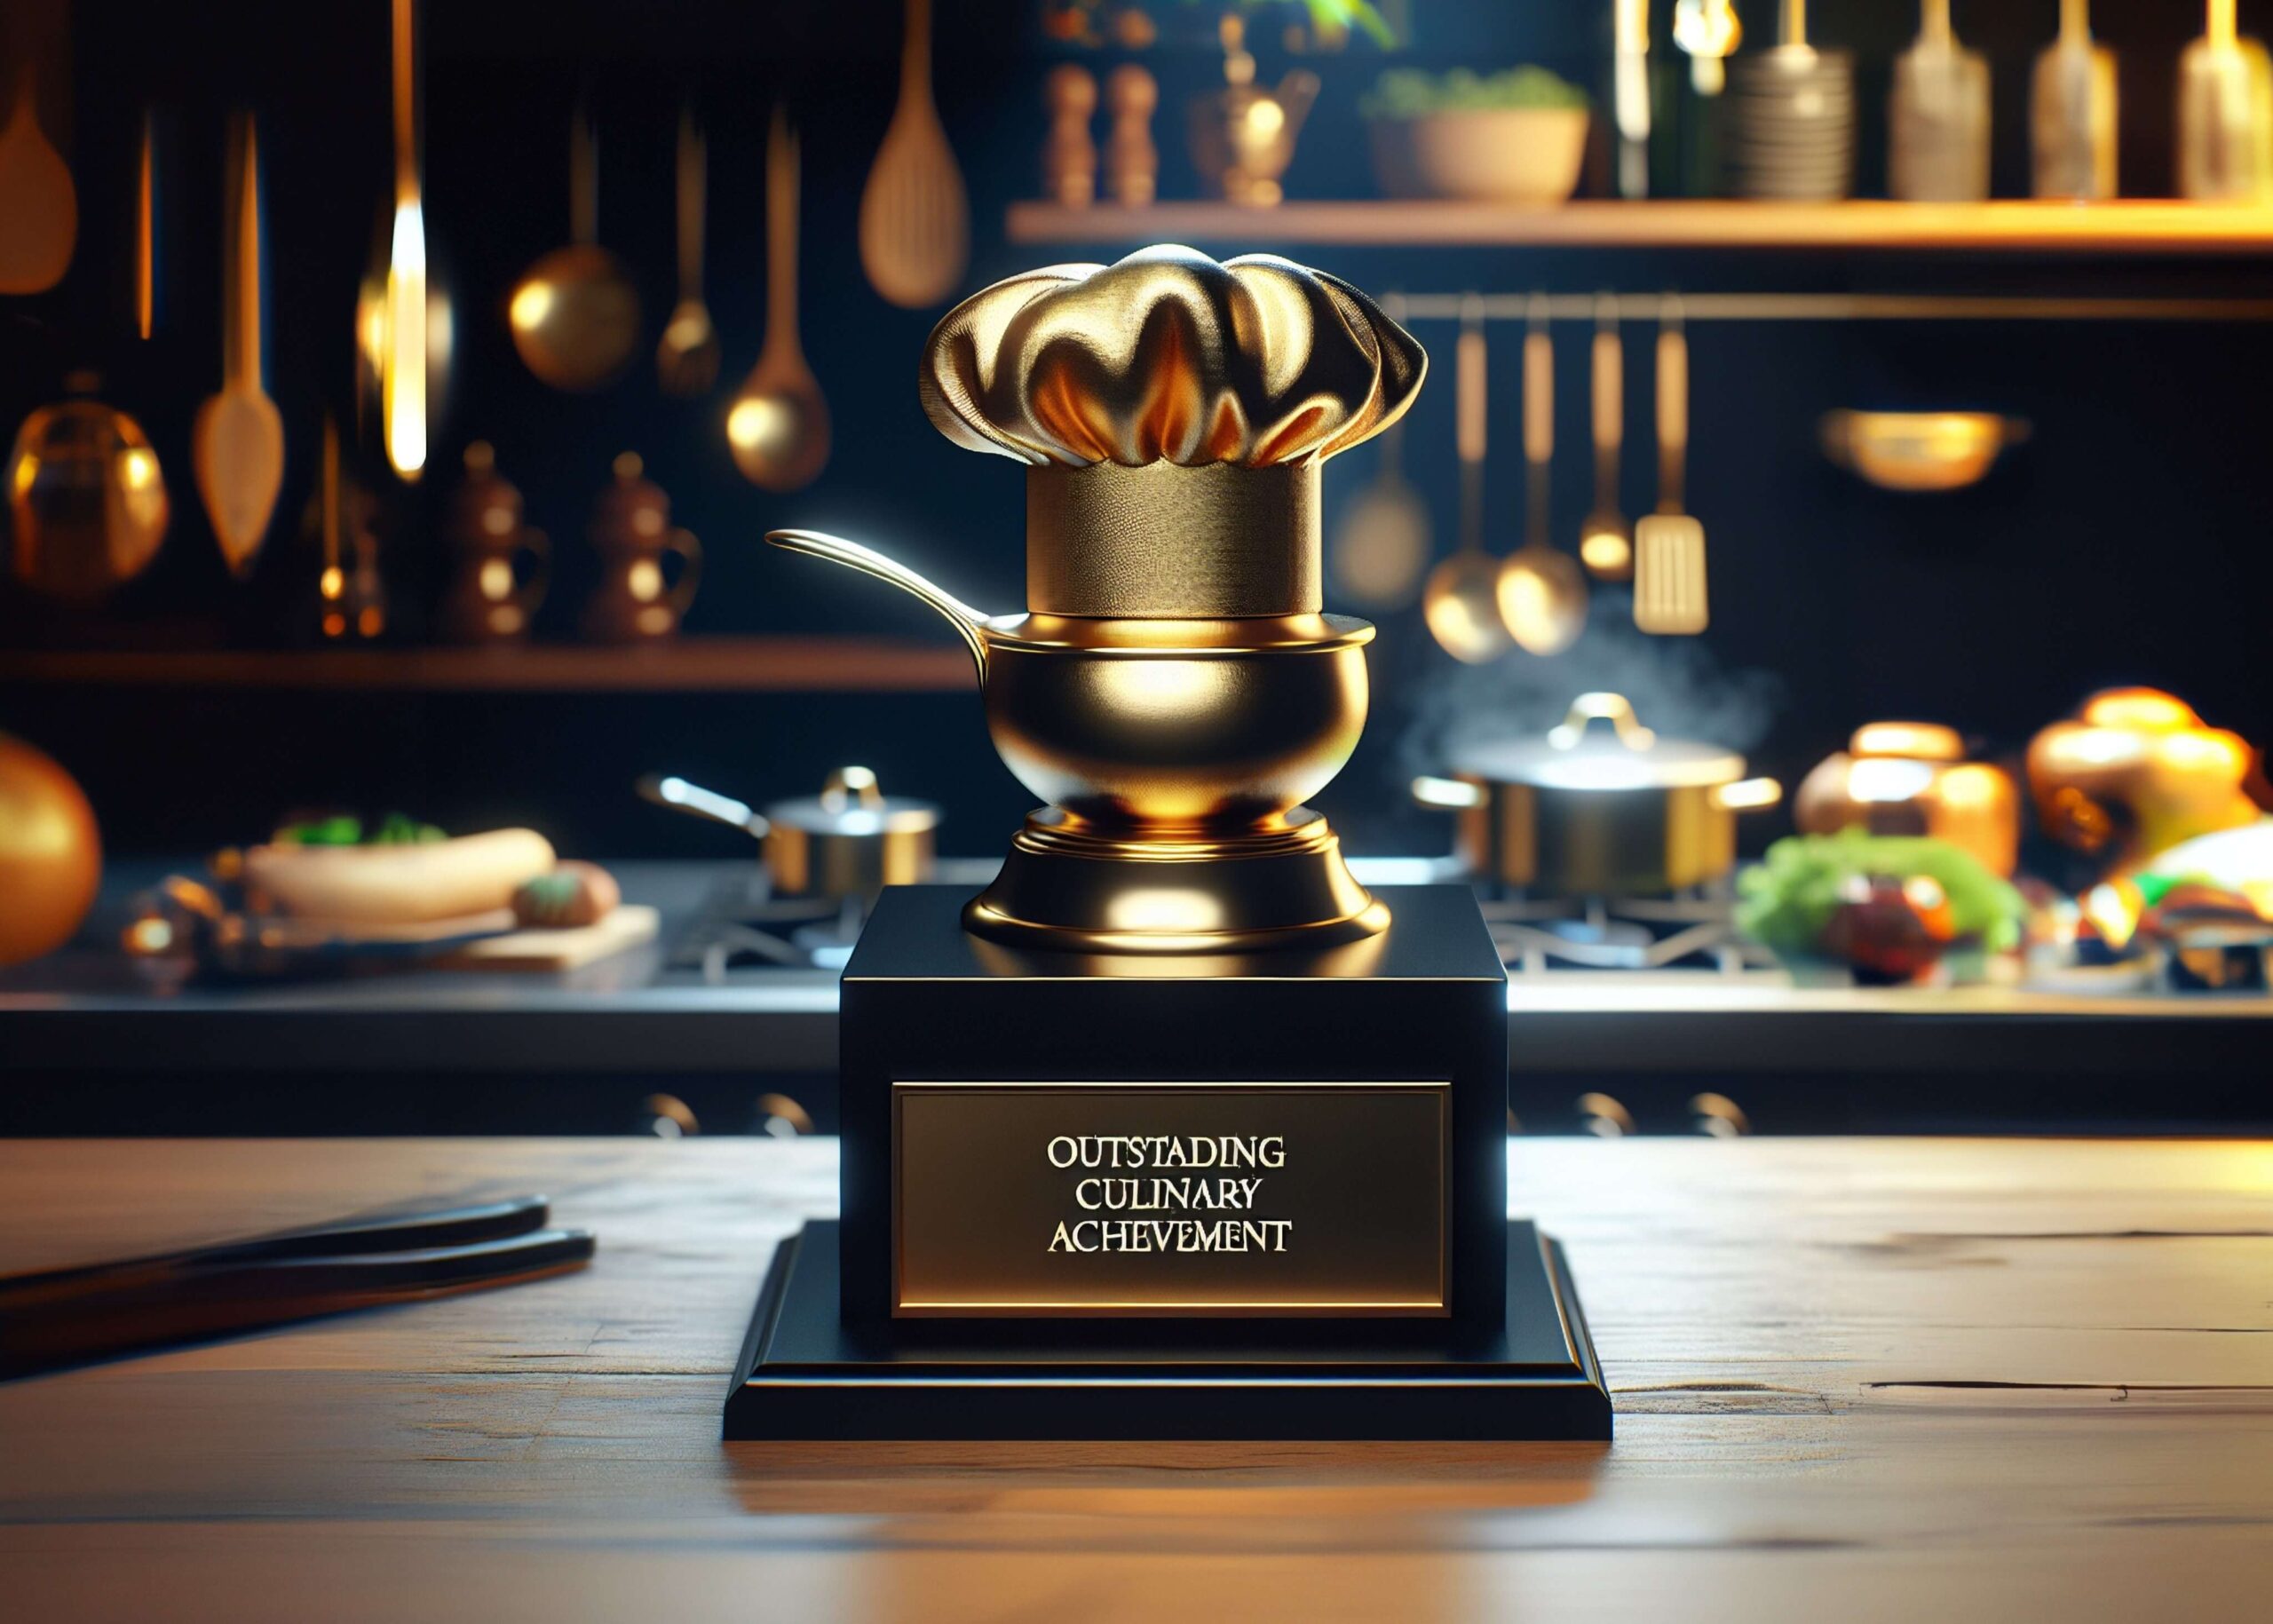 AI-generated image of a culinary award